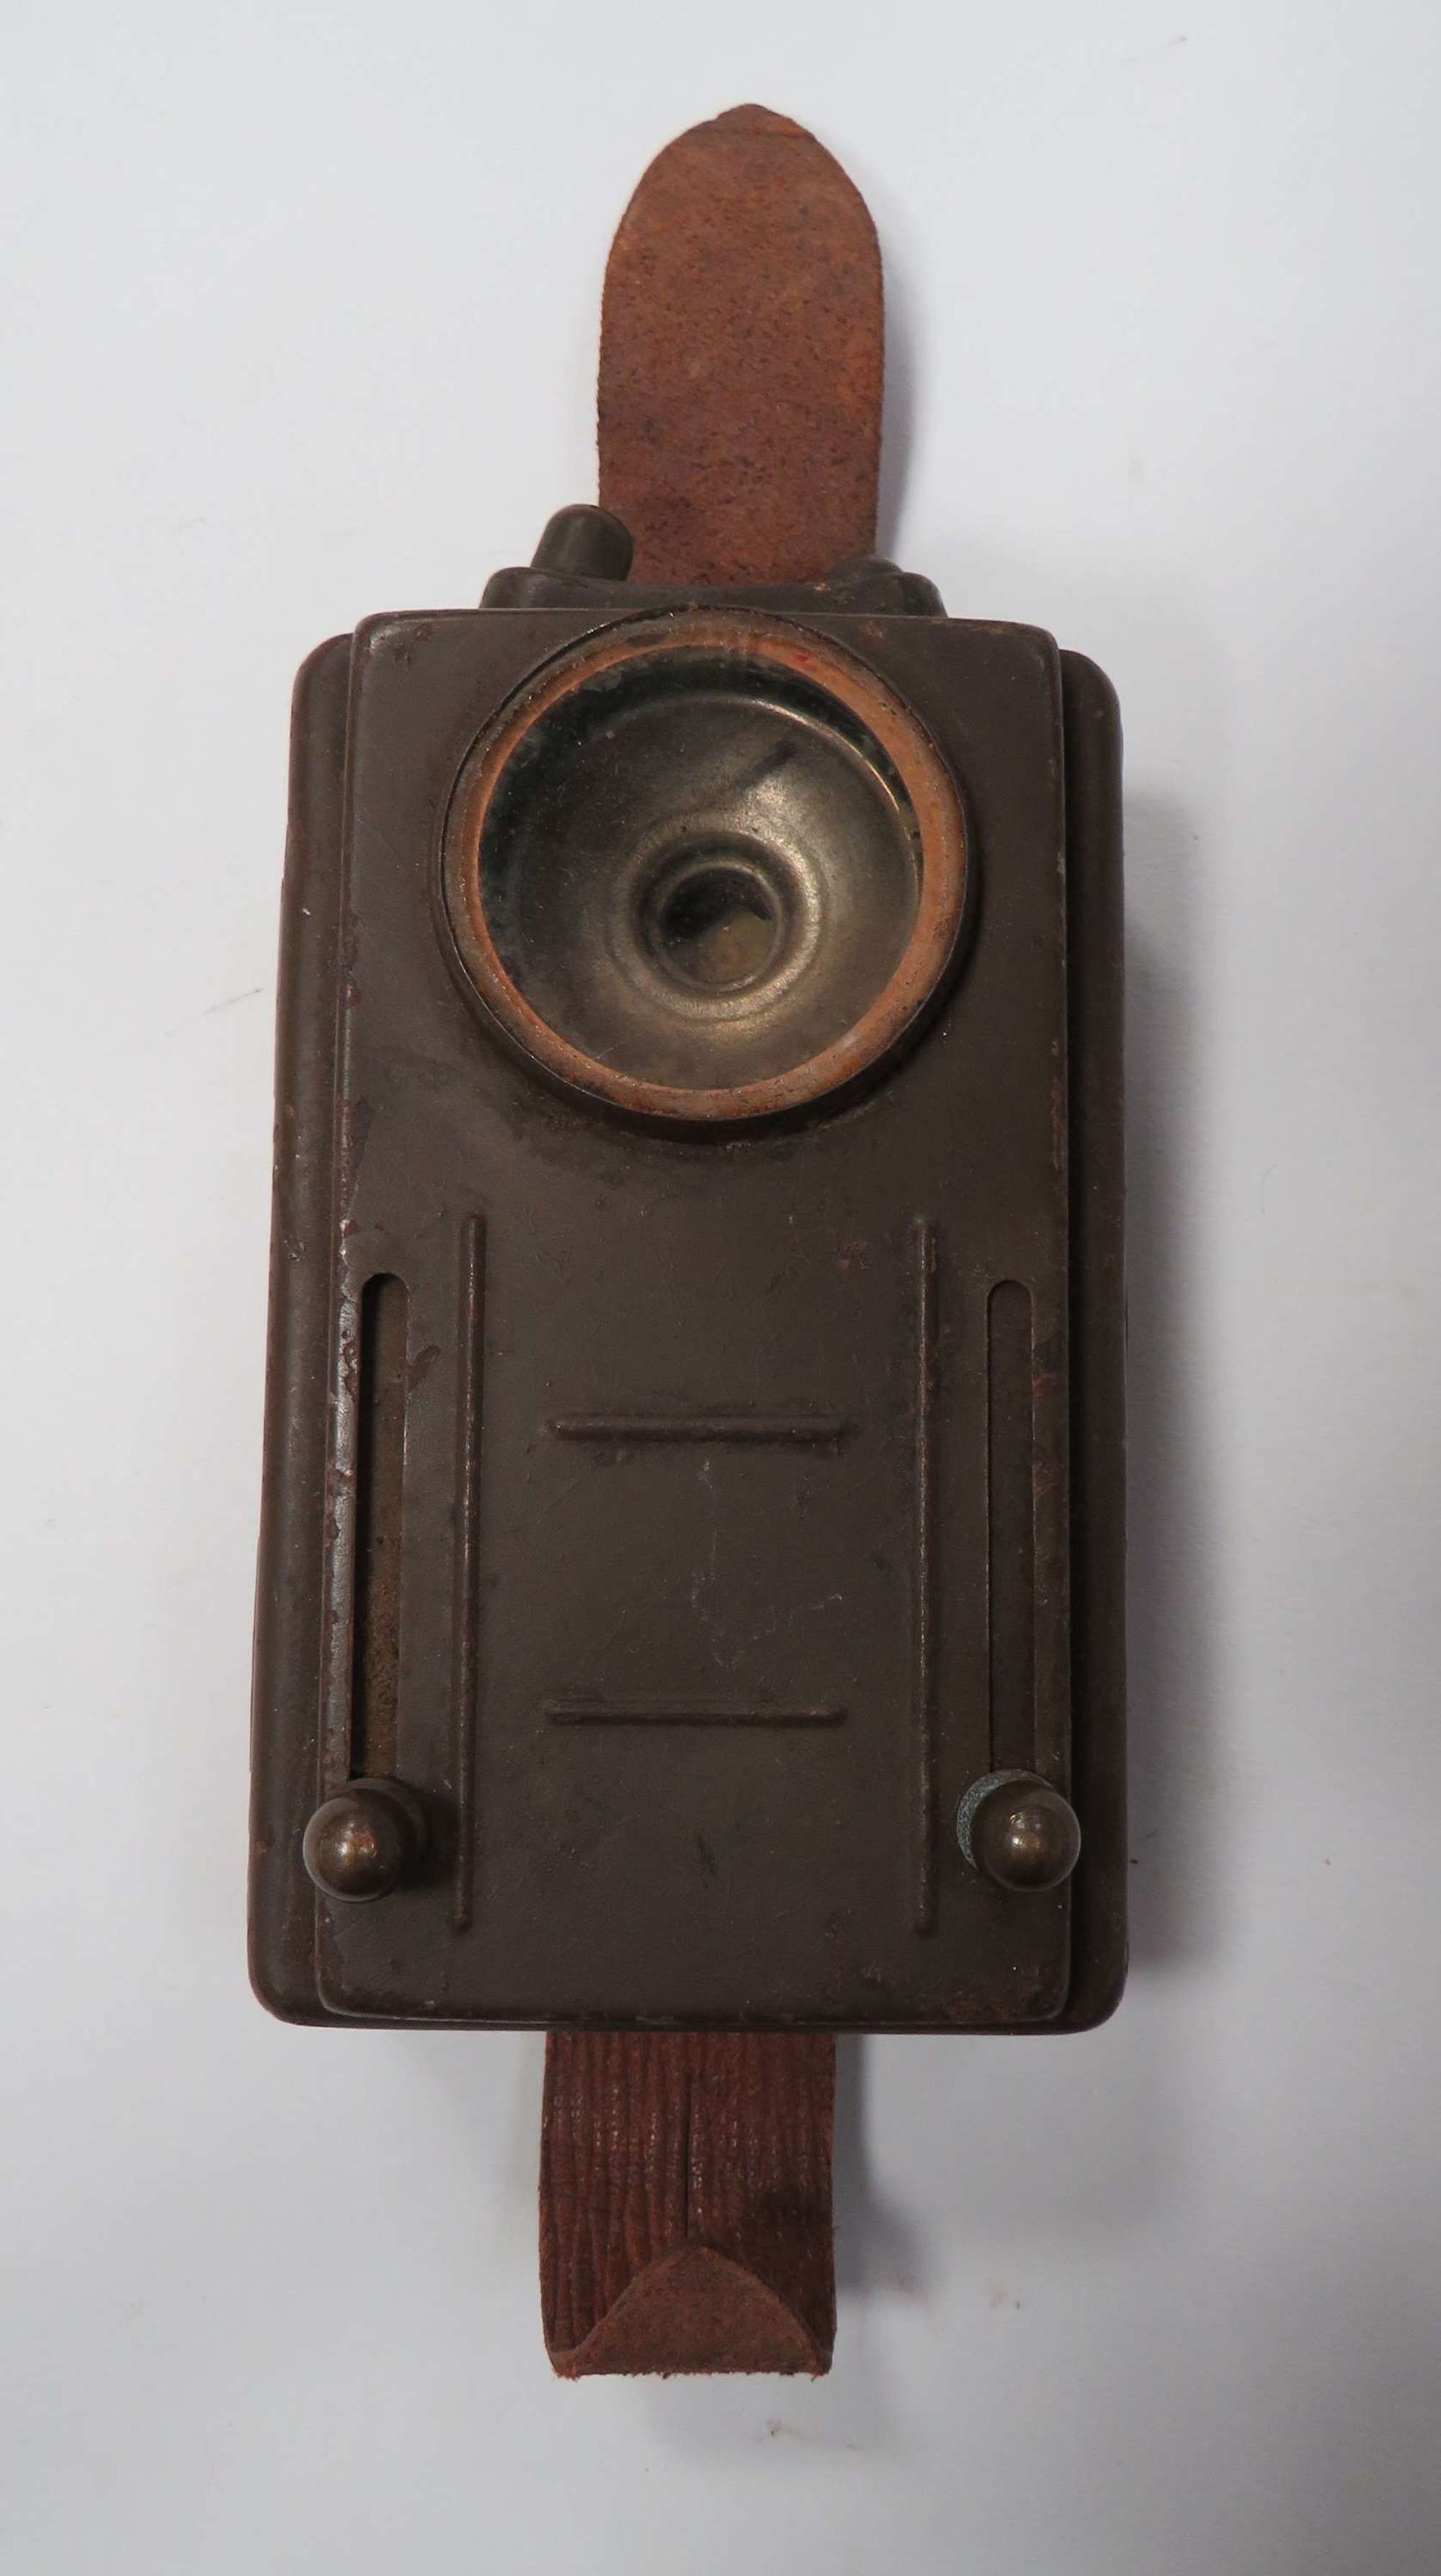 WW2 Pocket Signal Torch